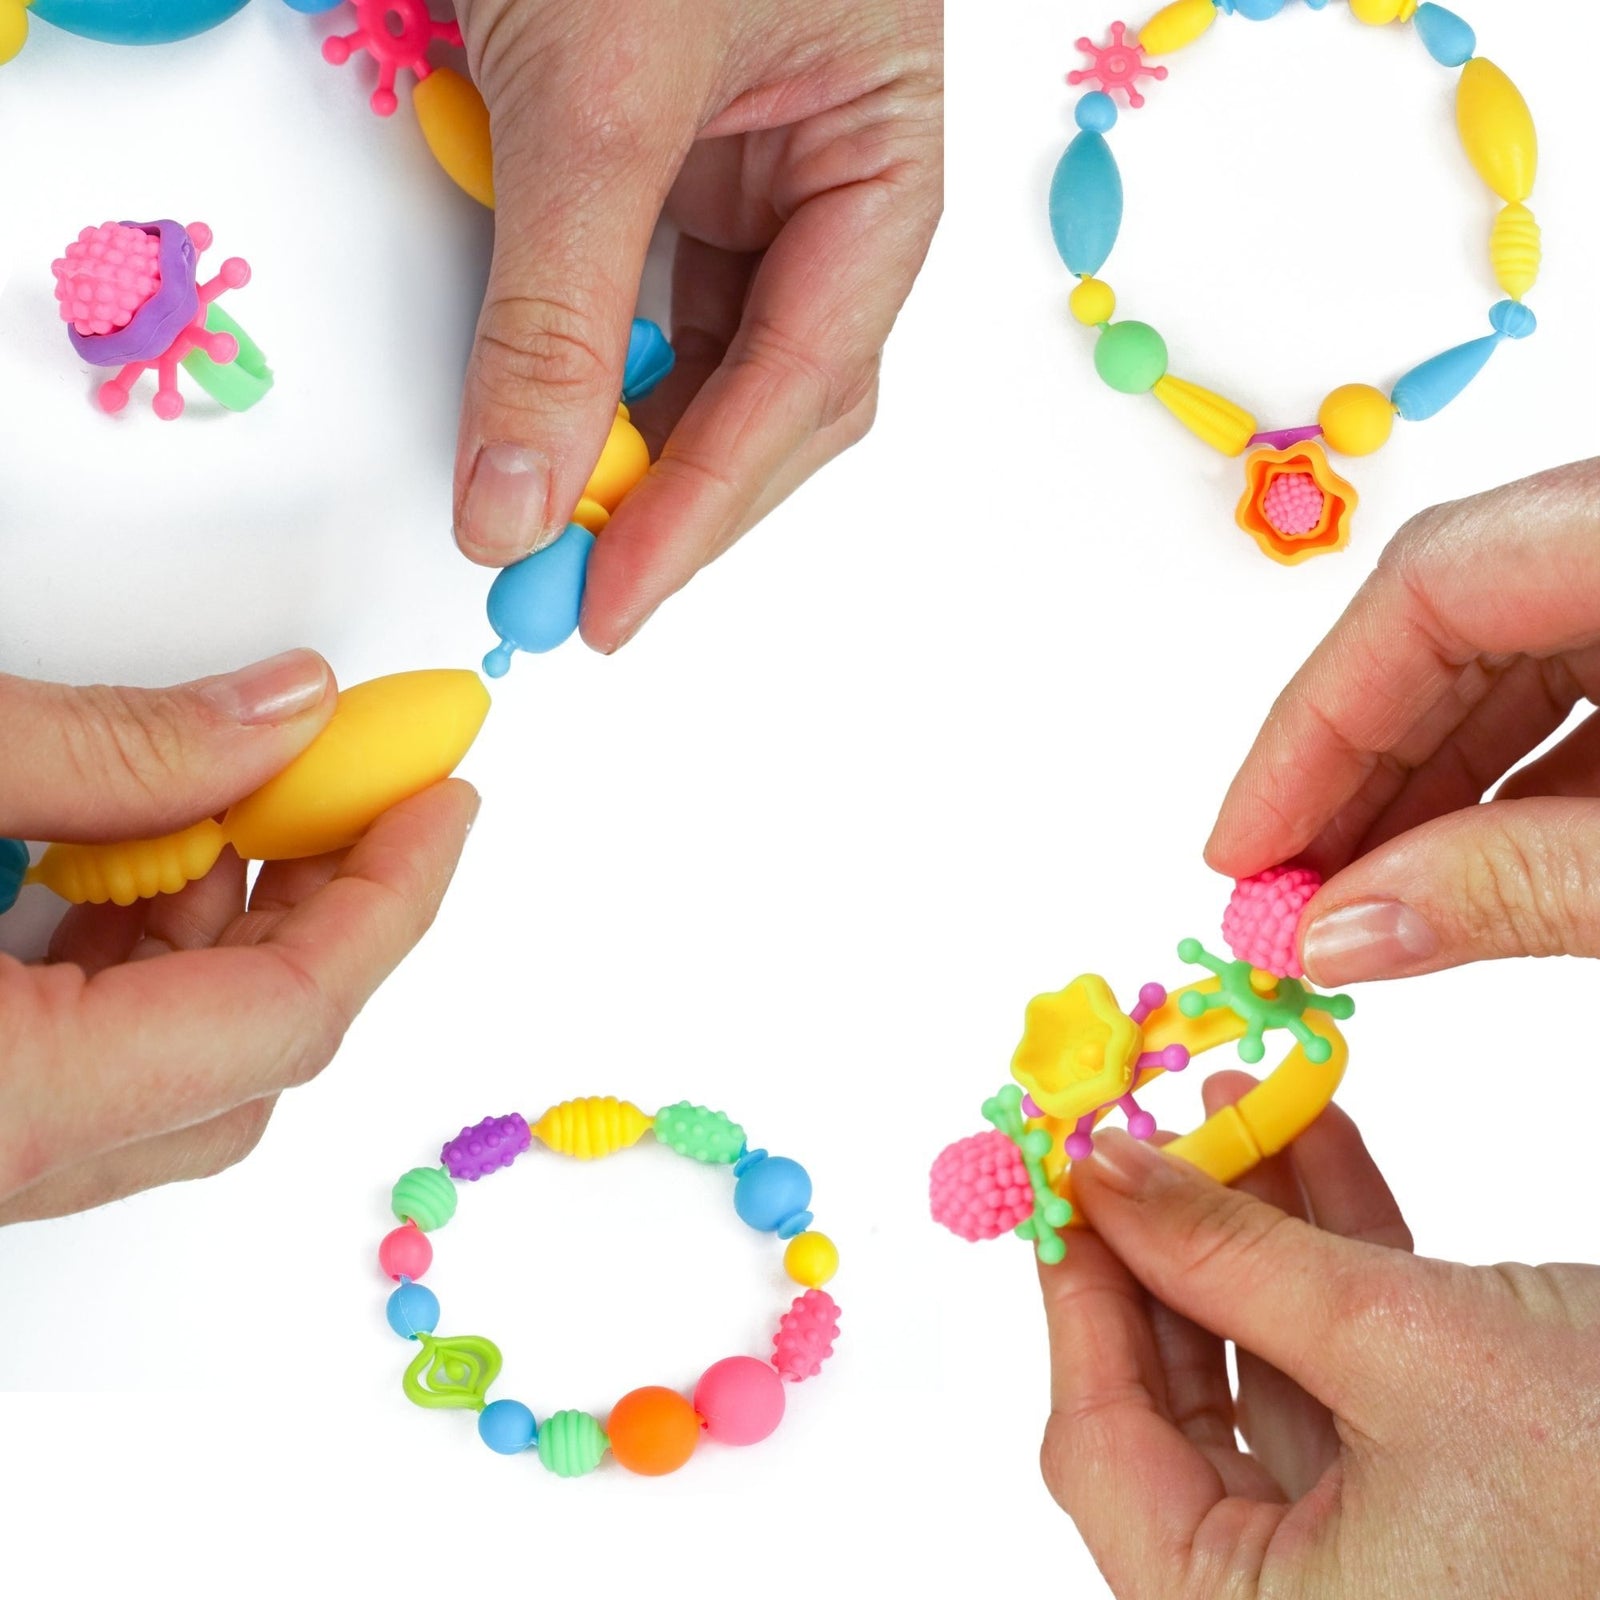 Pop Beads Jewelry Making Kit for Girls, Toy Jewelry